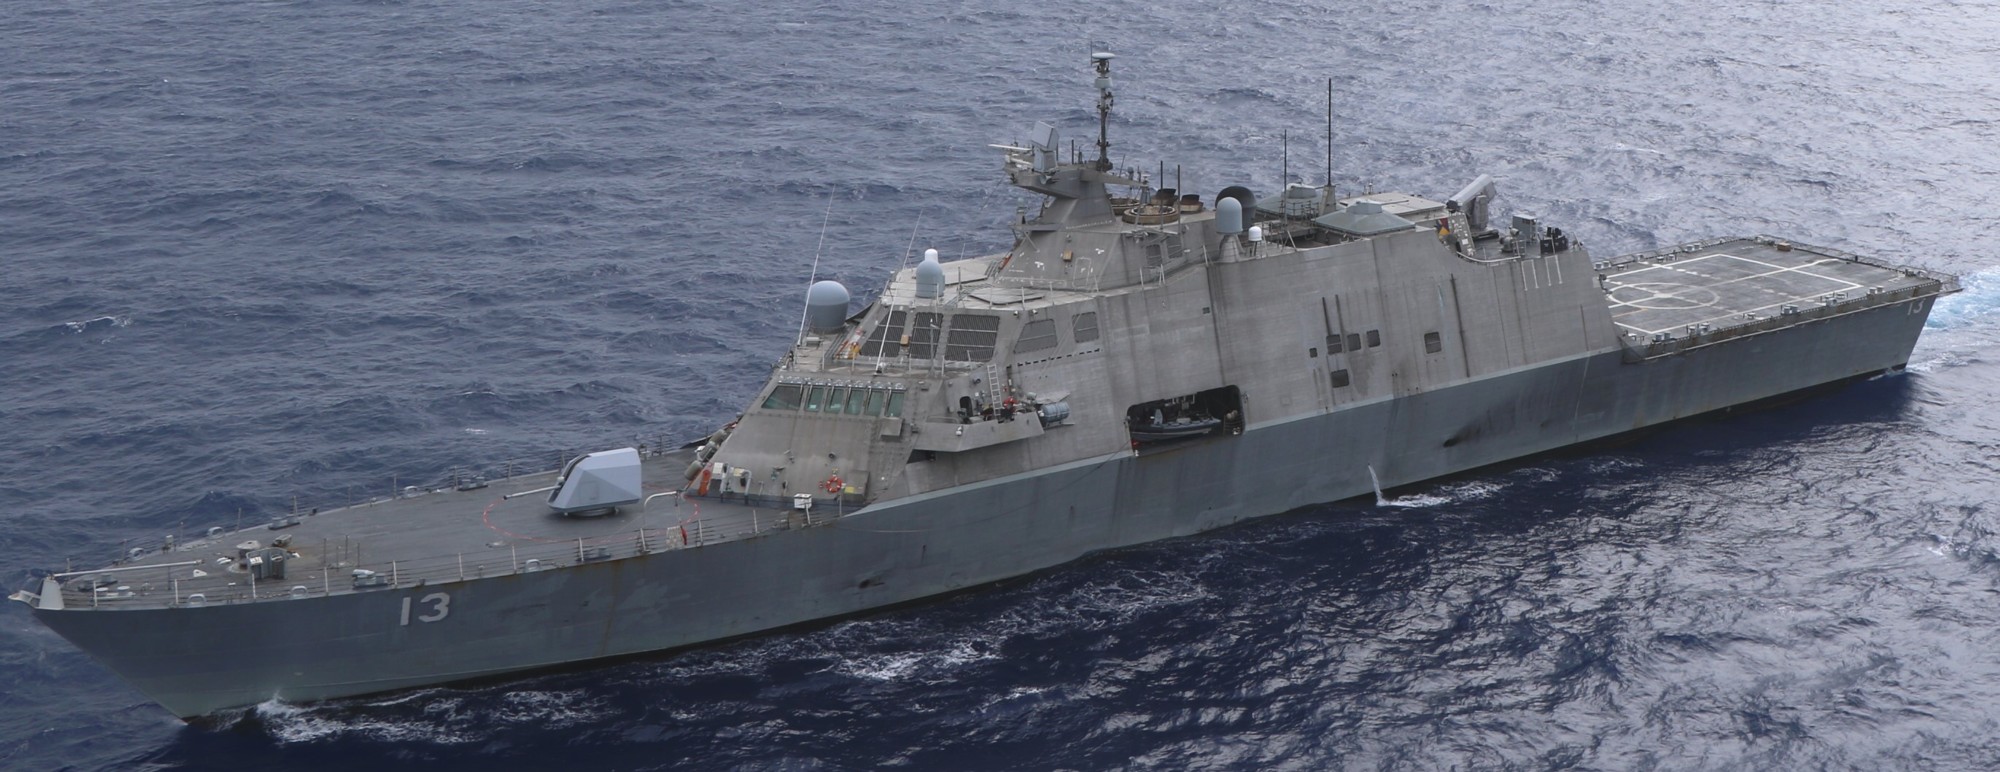 lcs-13 uss wichita freedom class littoral combat ship us navy 31